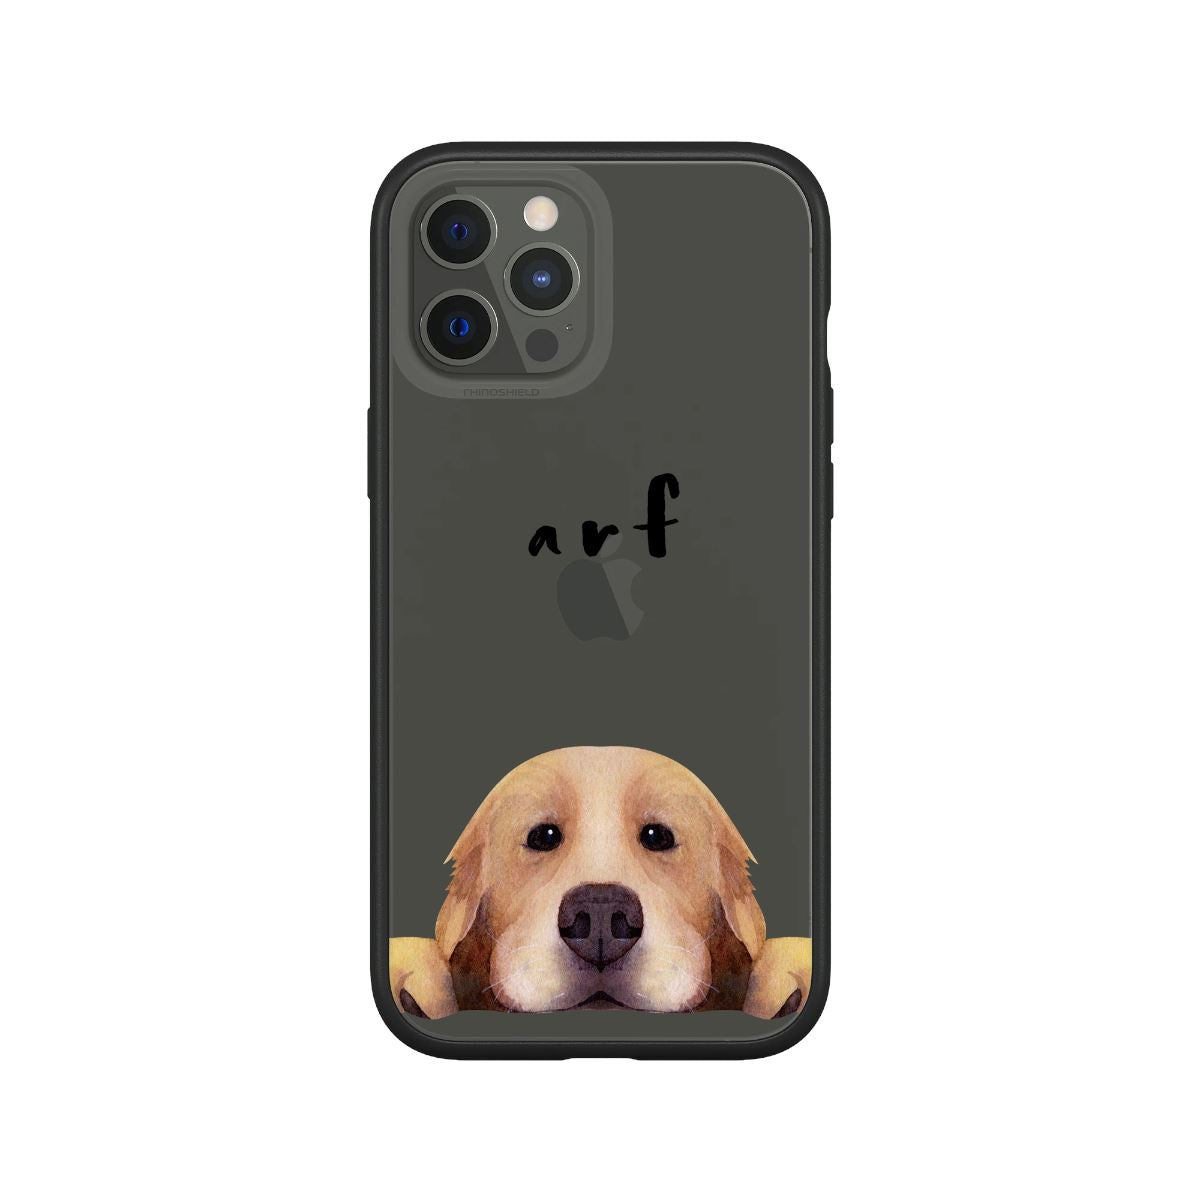 RhinoShield Mod NX Modular Case for iPhone 12 Series (2020) iPhone 12 Series RhinoShield iPhone 12/12 Pro 6.1" Puppy Dog Goes Arf (Backplate) 